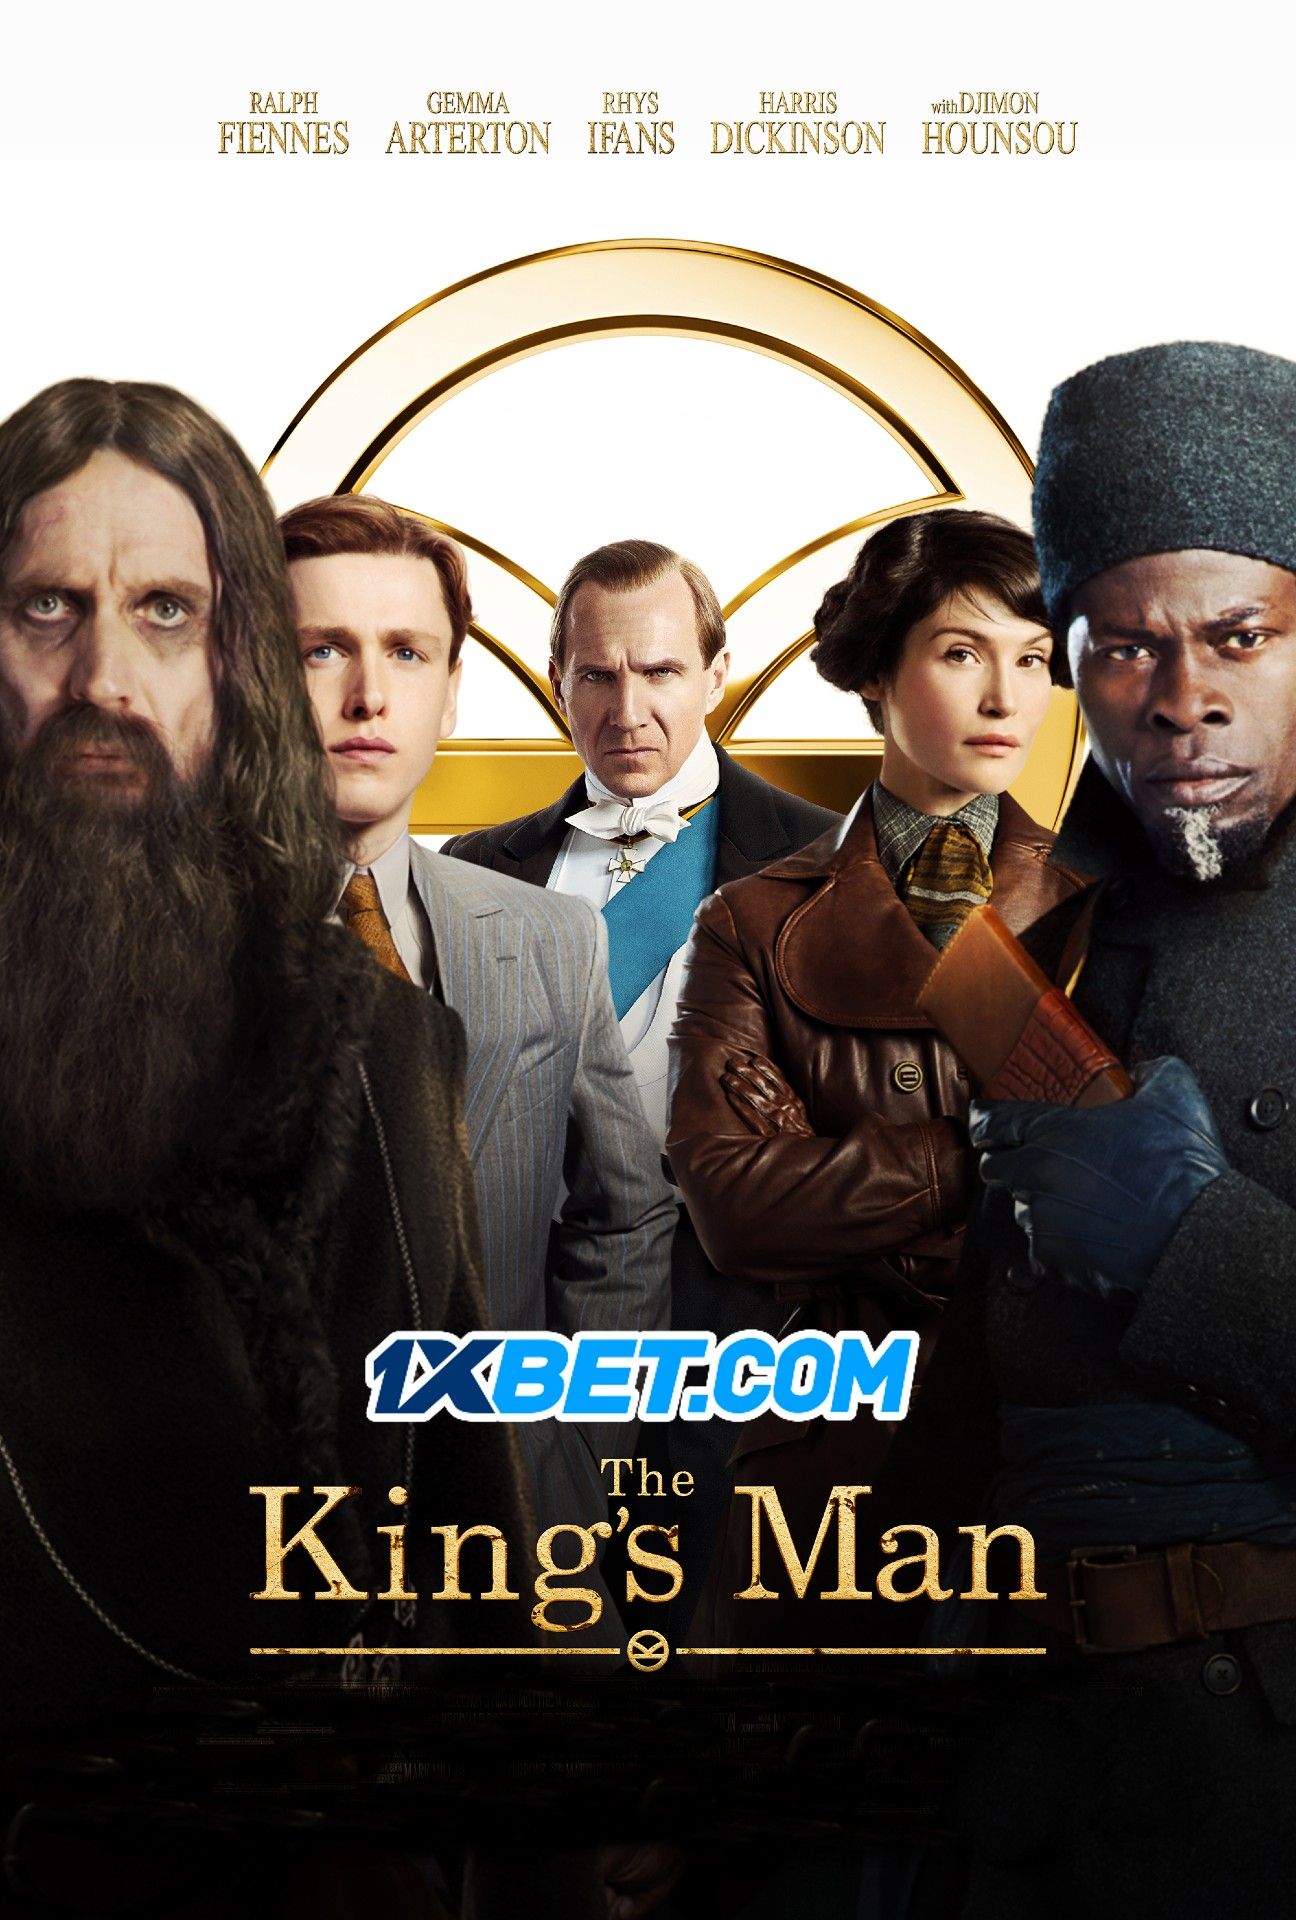 The Kings Man (2021) Hindi Dubbed V2 CAMRip download full movie